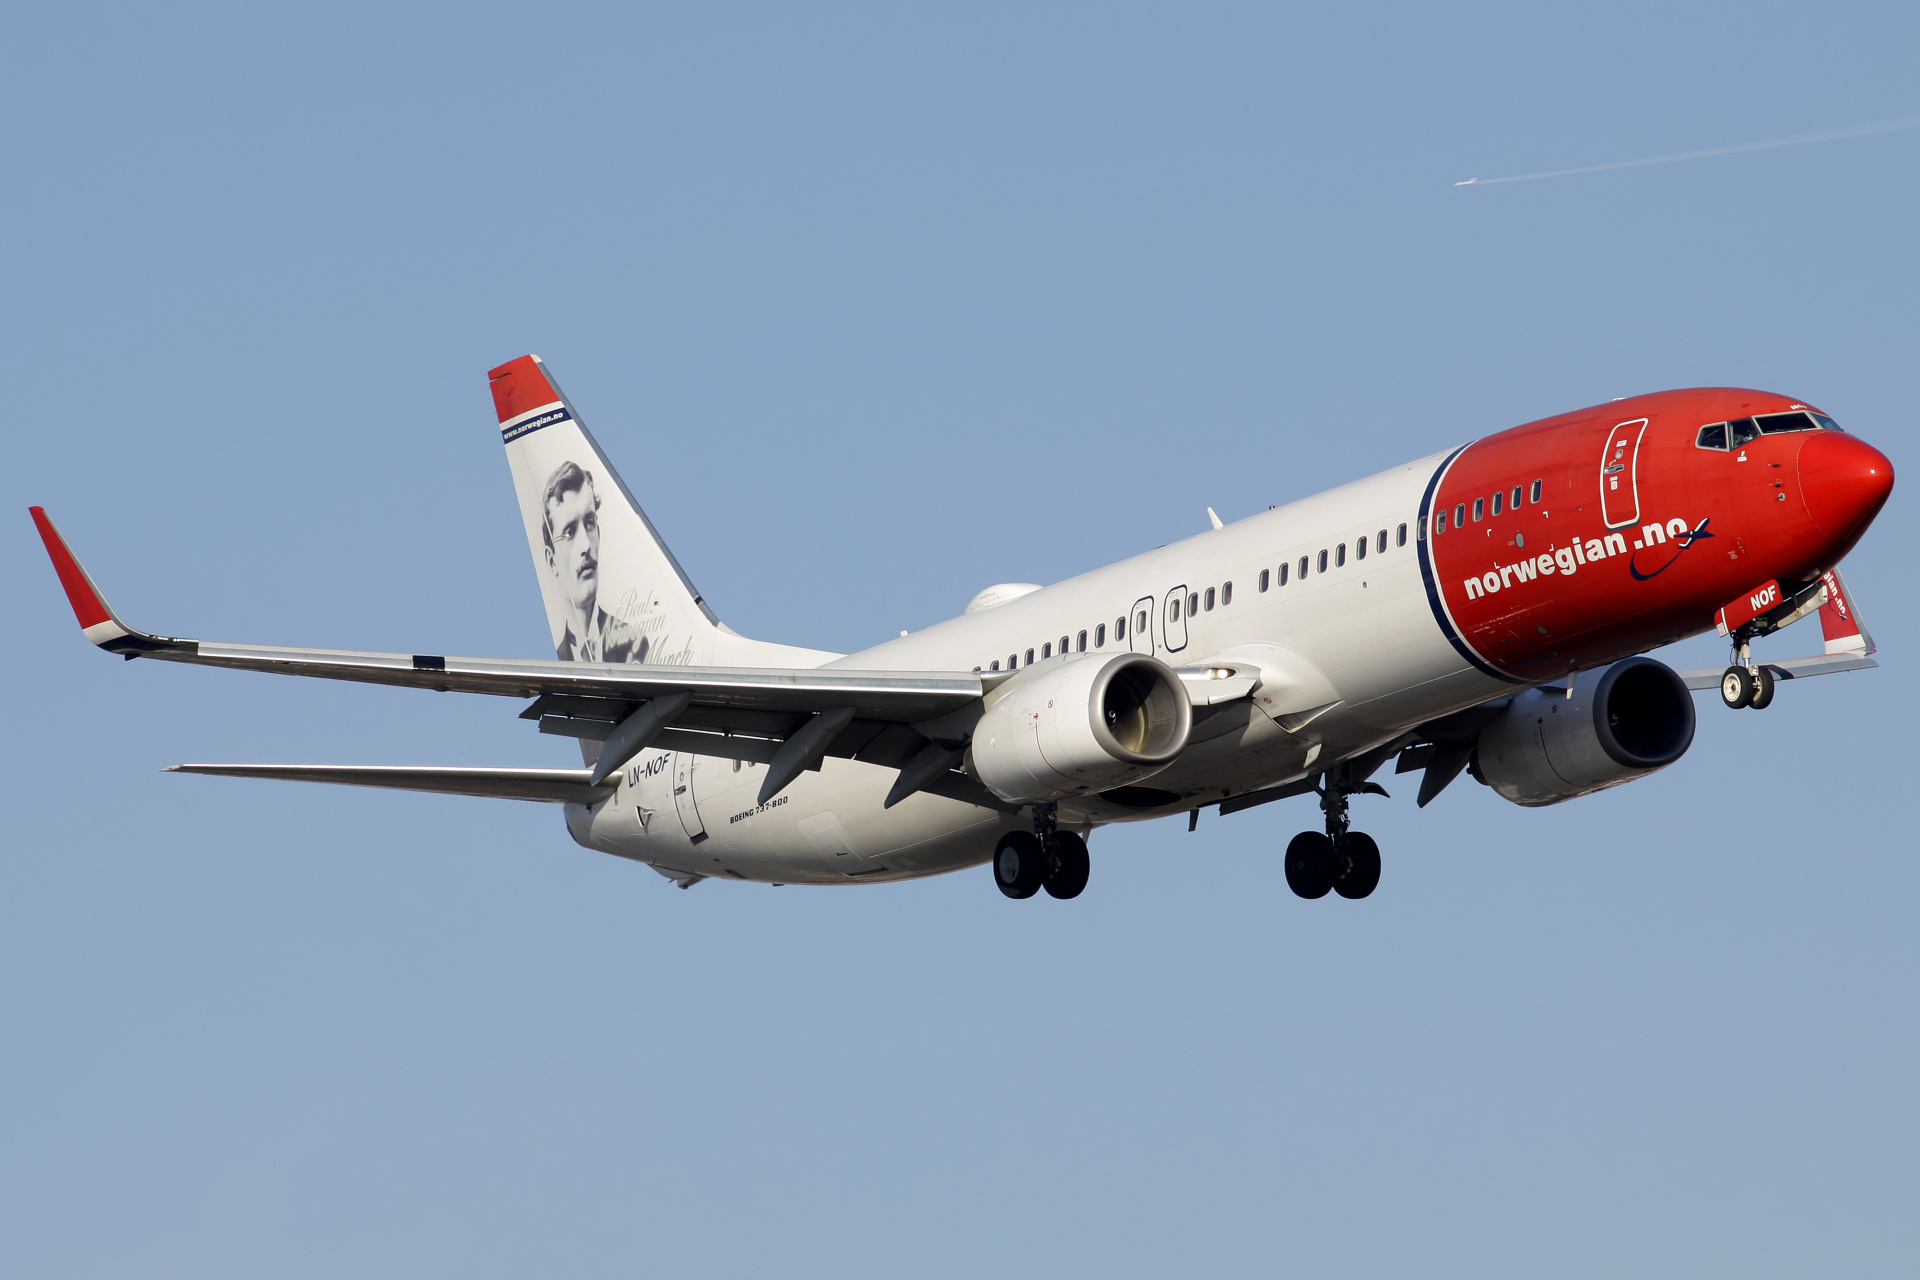 LN-NOF, Norwegian Air Shuttle (Aircraft » EPWA Spotting » Boeing 737-800 » Norwegian Air)